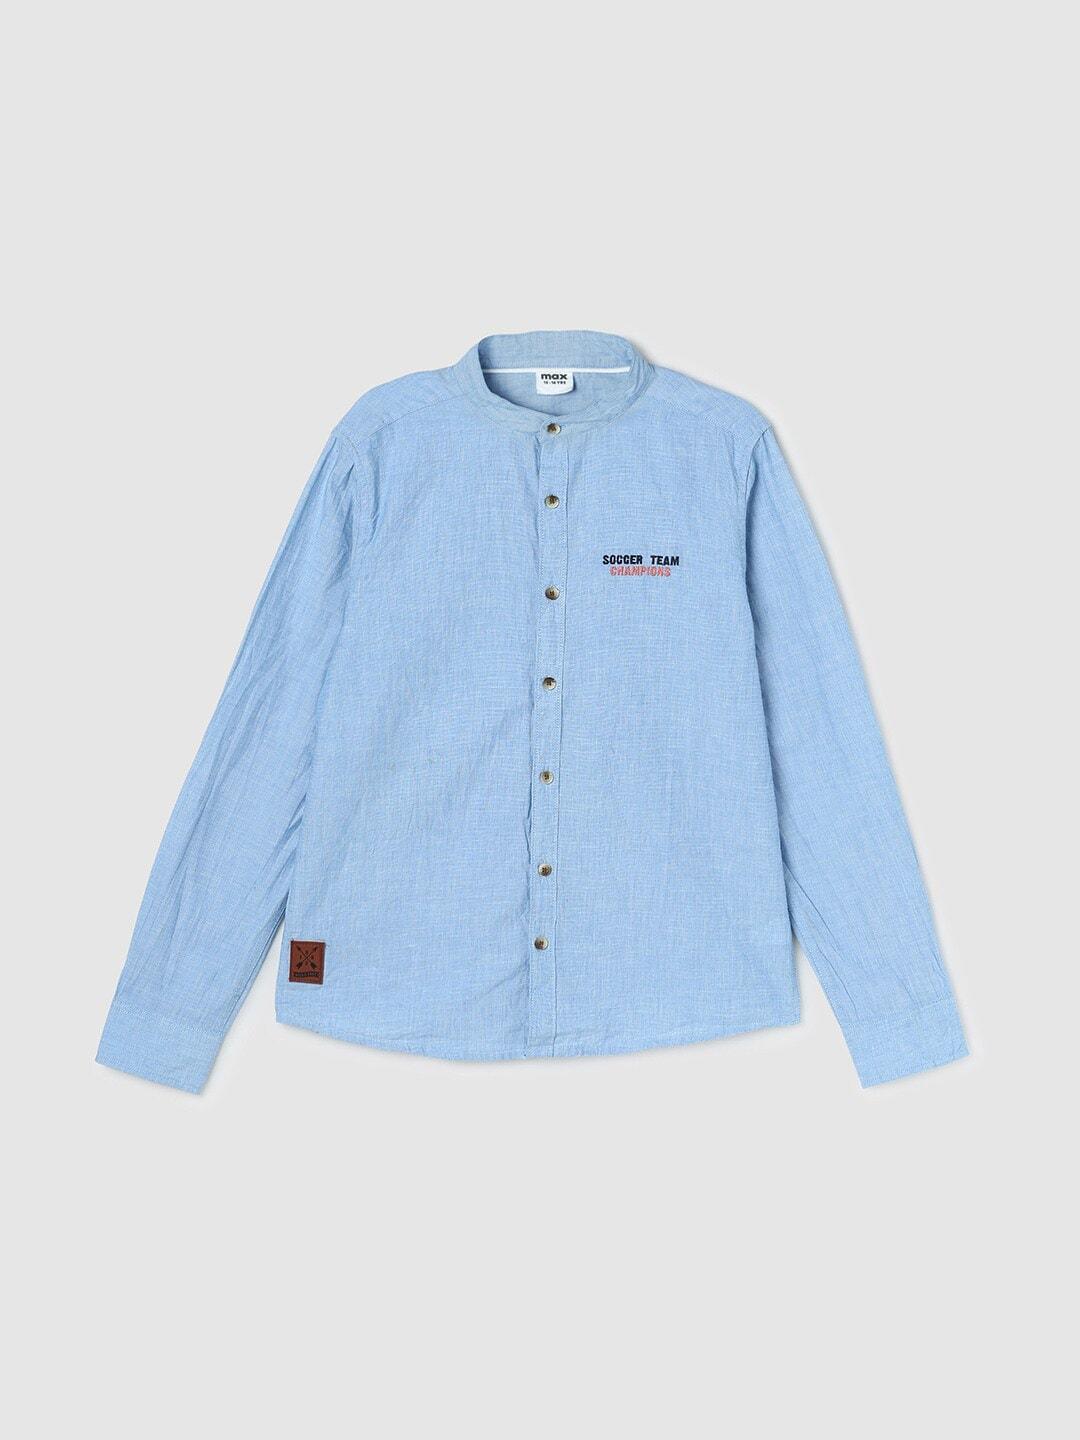 max boys blue casual cotton shirt